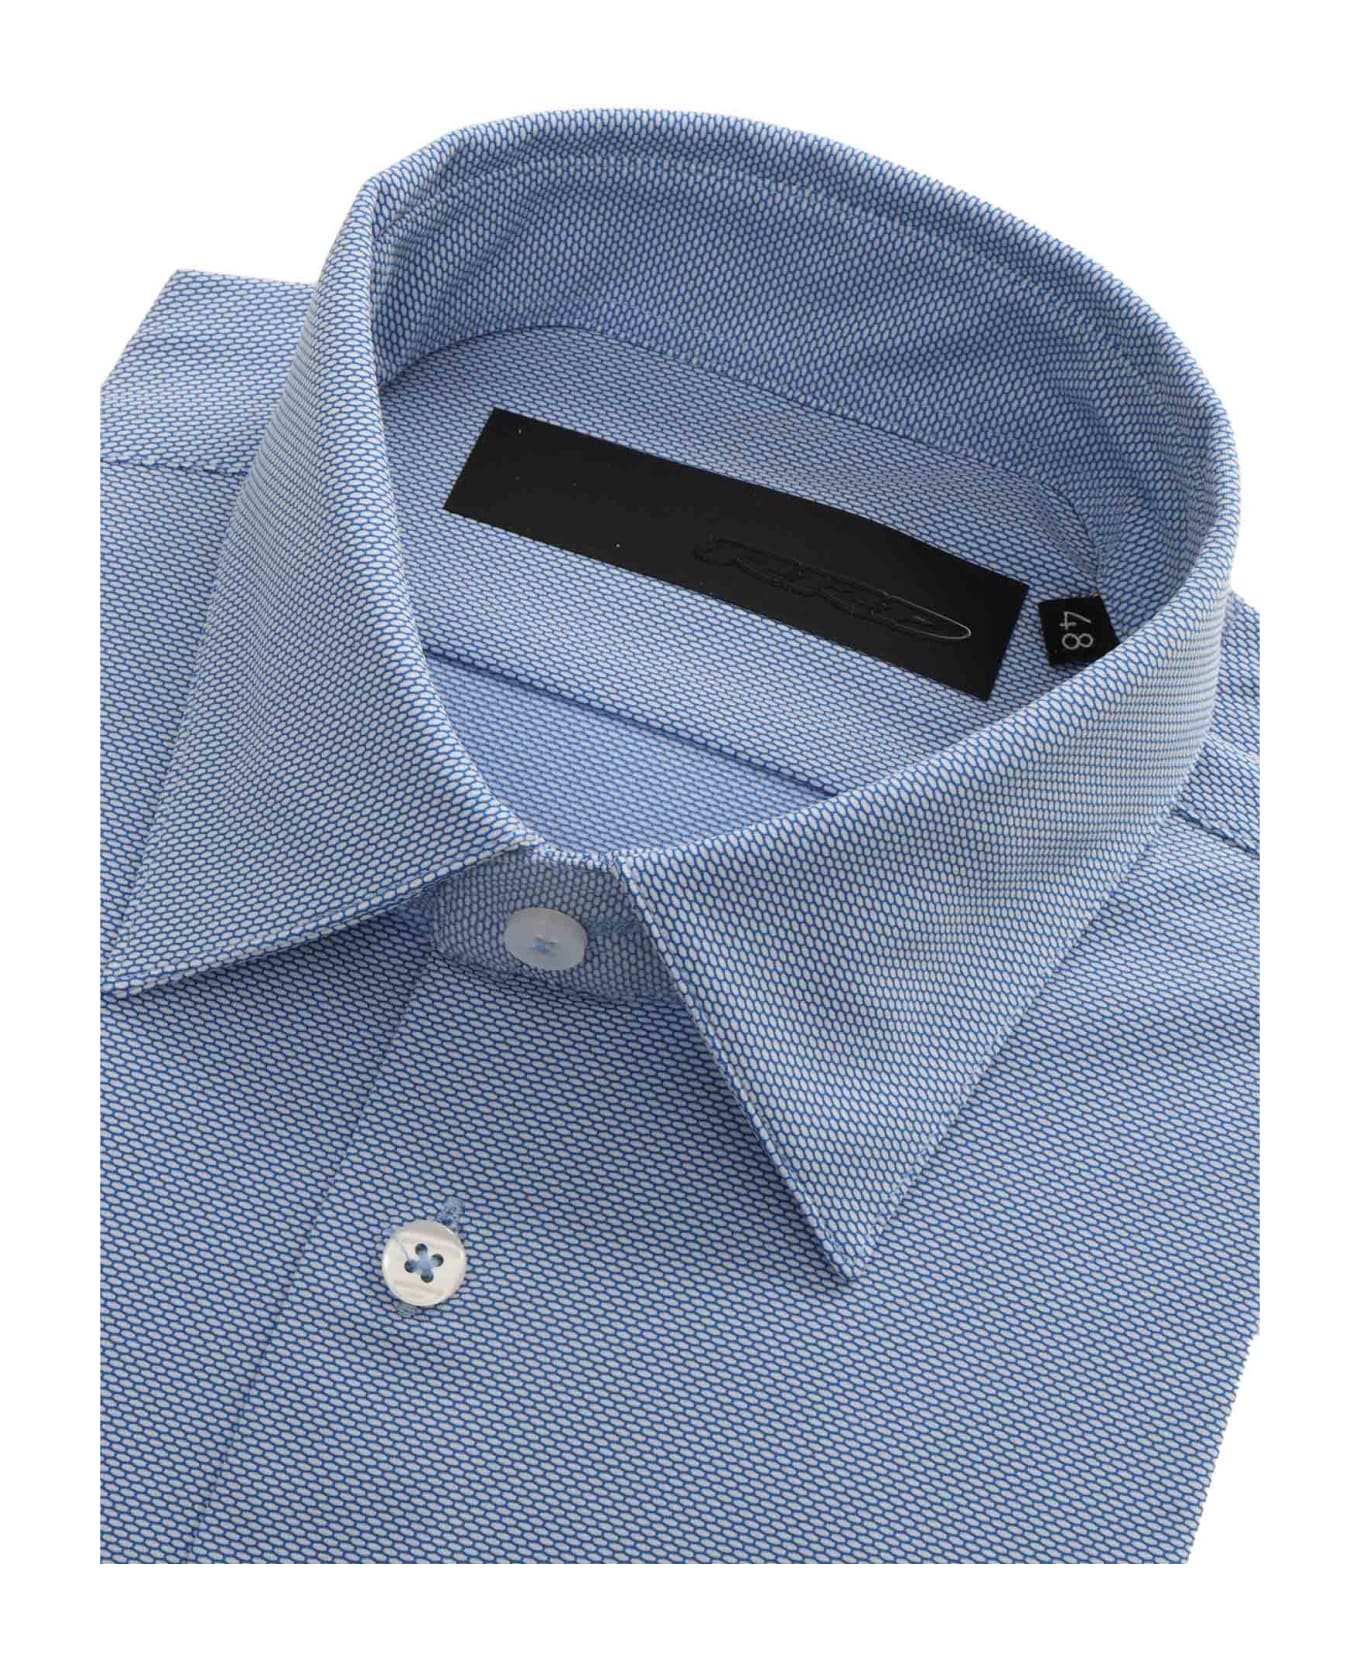 RRD - Roberto Ricci Design Jacquard Oxford Shirt - LIGHT BLUE シャツ